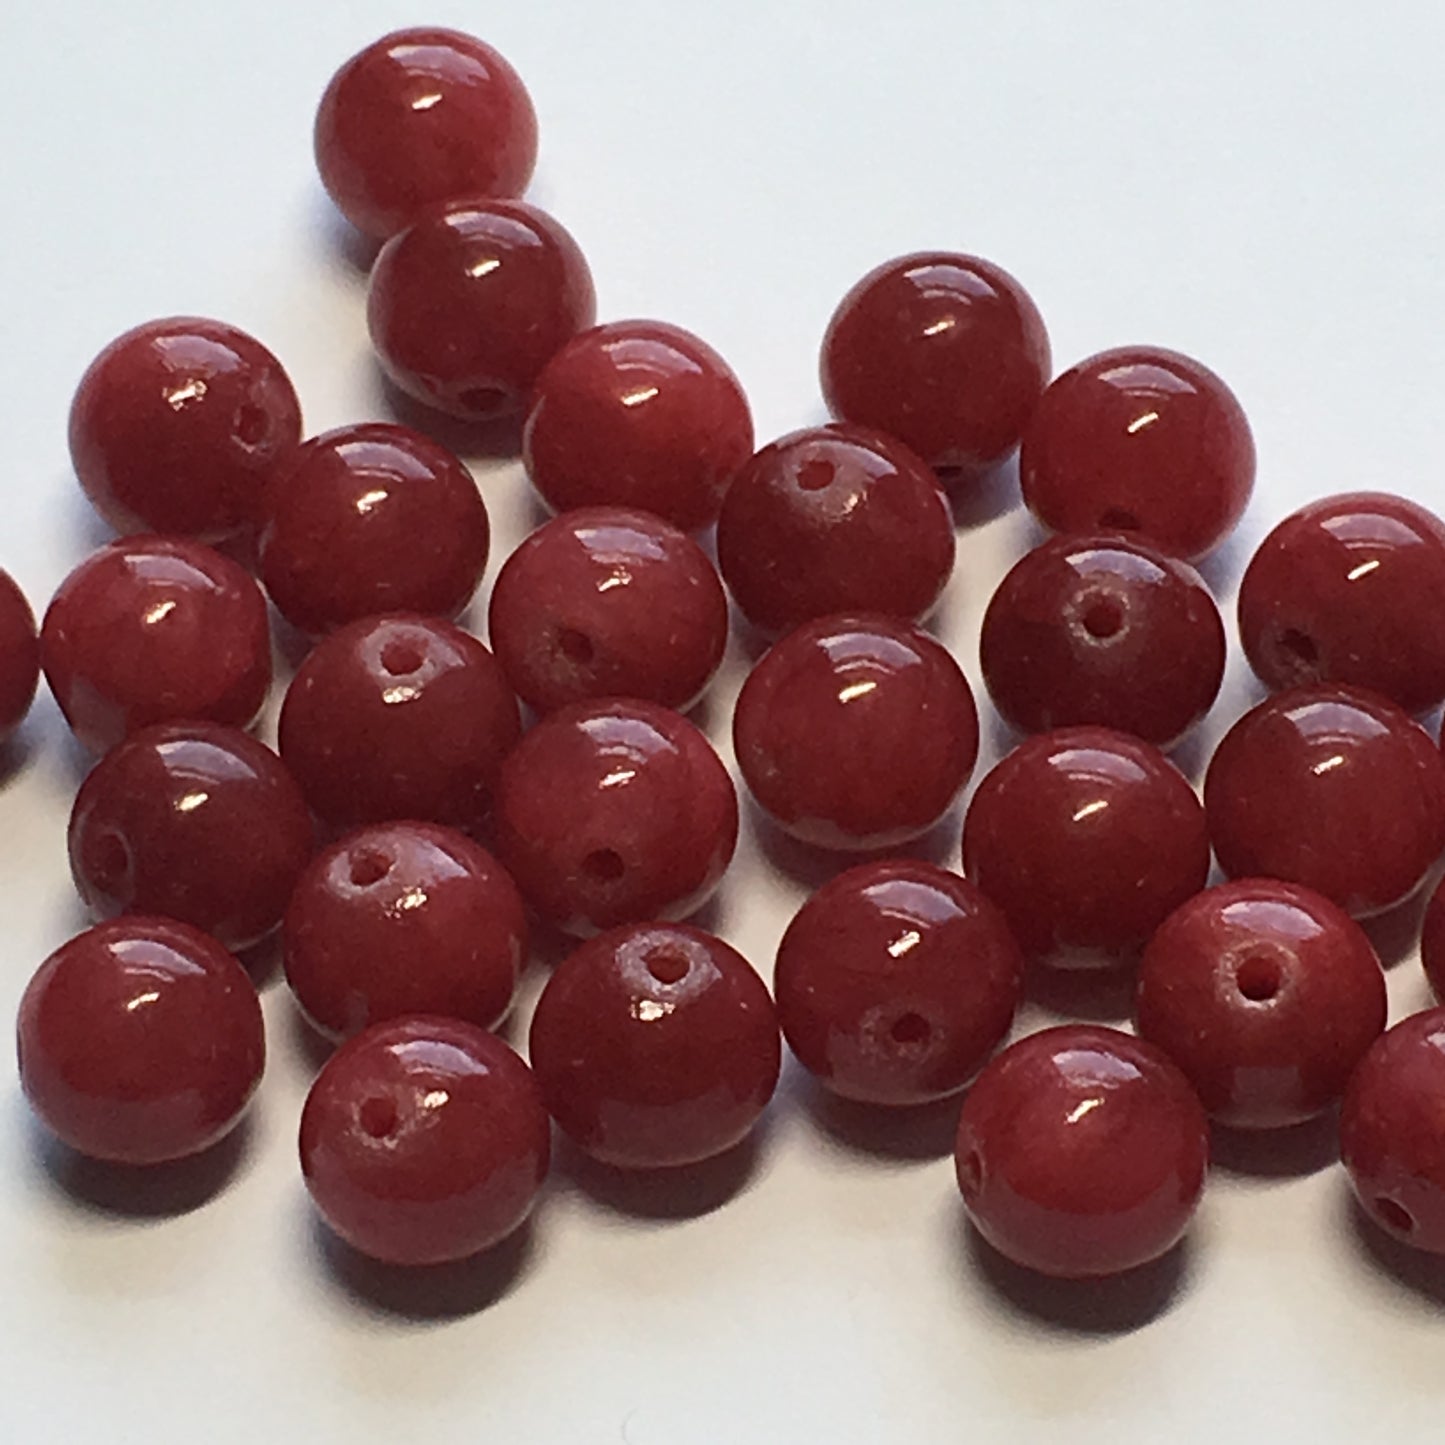 Dyed Red Jade Semi-Precious Stone Round Beads 8 mm, 22 Beads